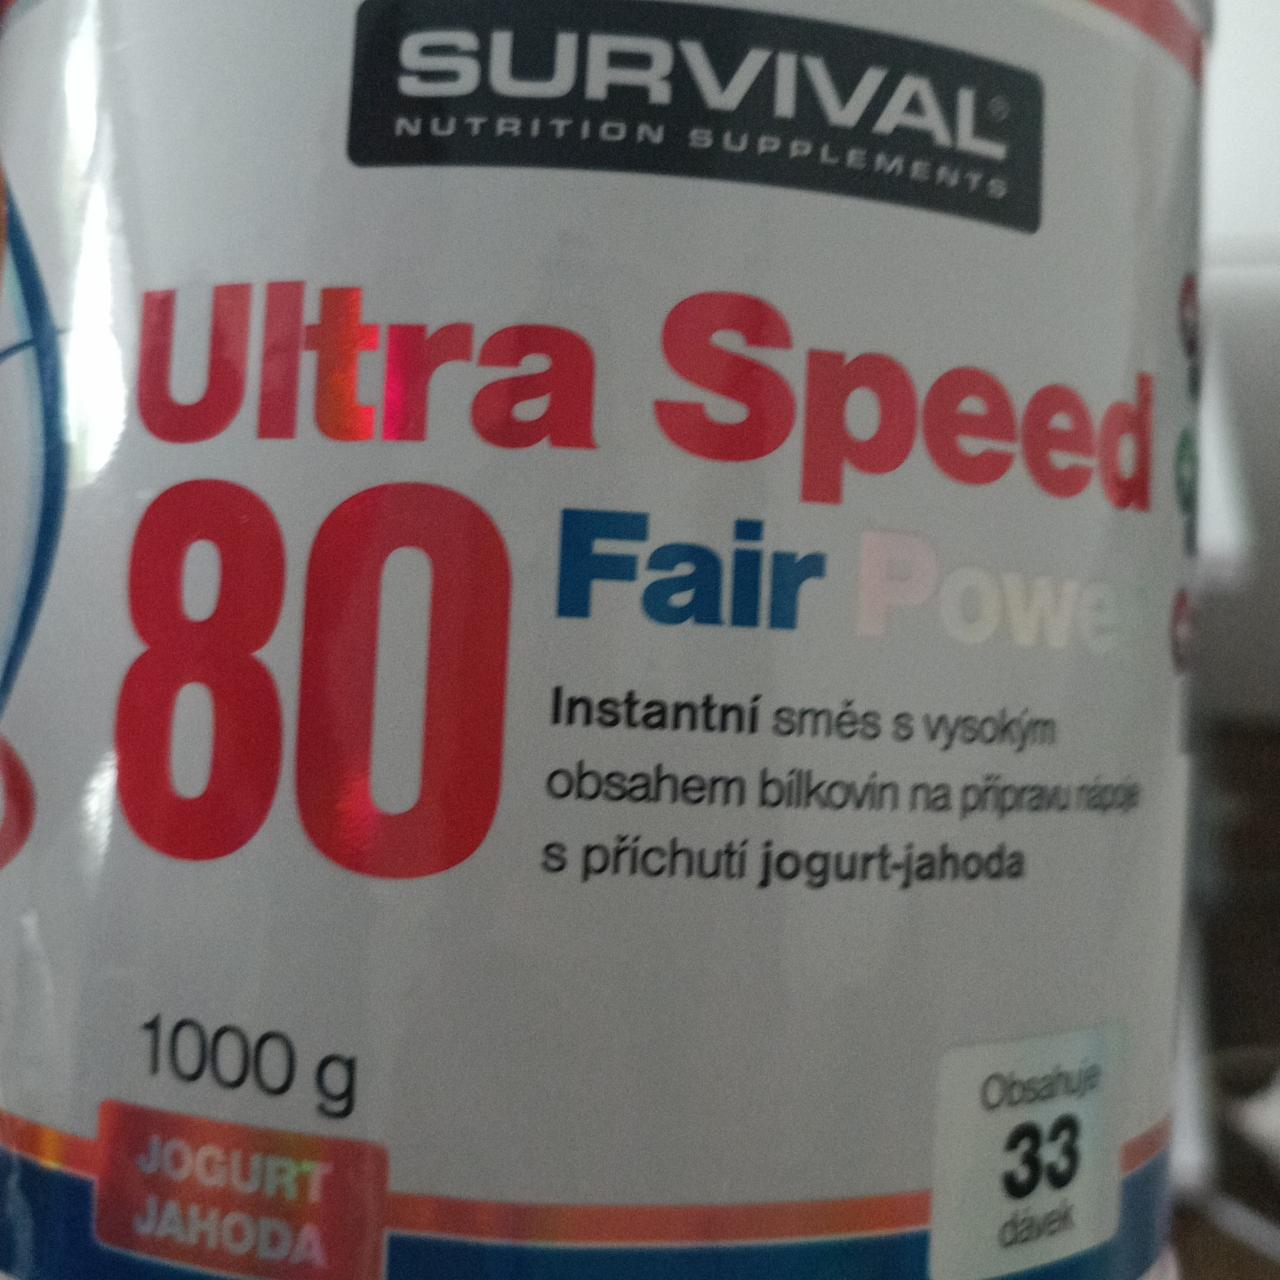 Fotografie - Ultra Speed 80 fair power Jogurt jahoda Survival Nutrition